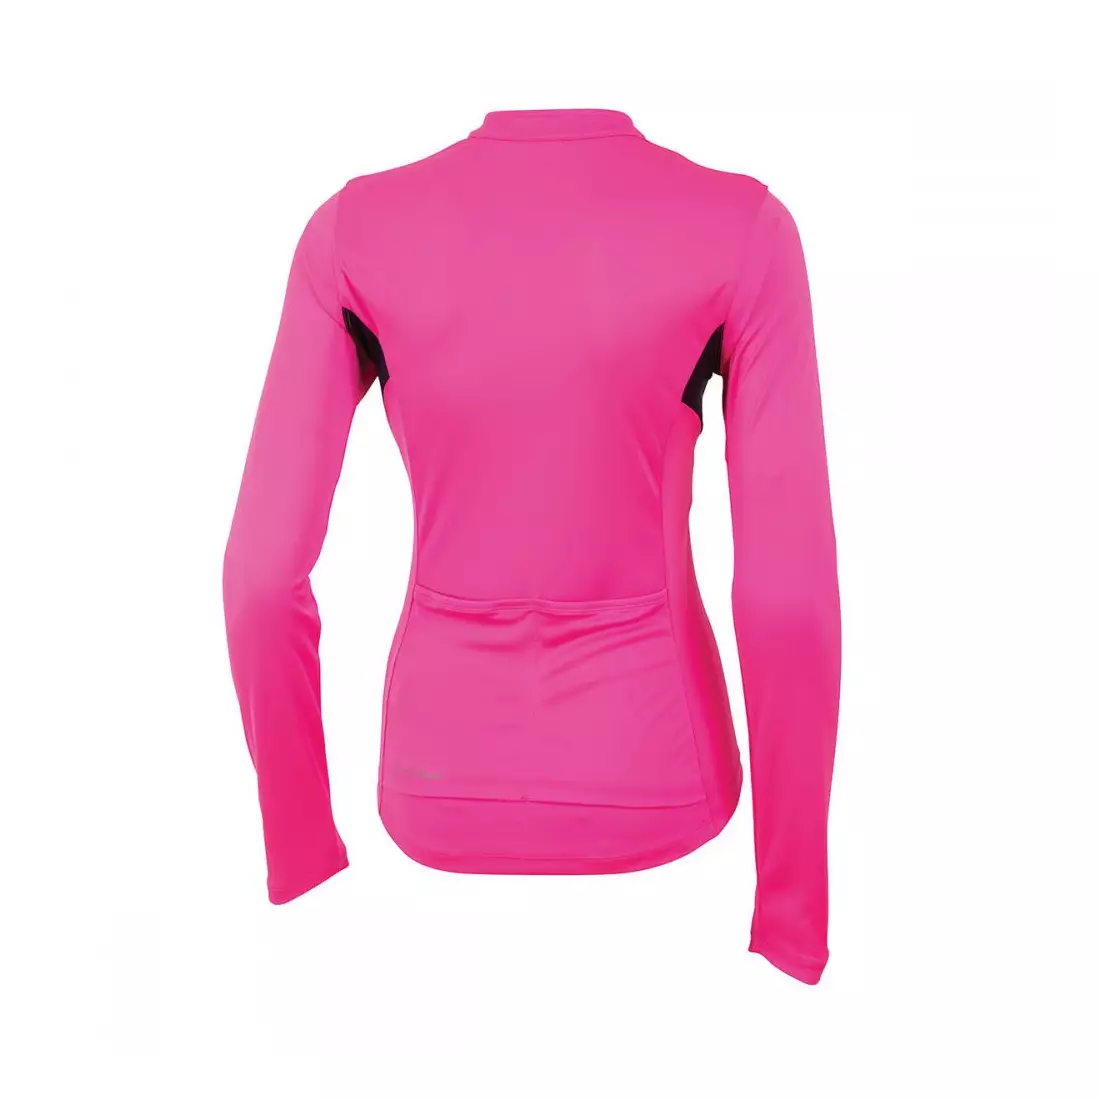 PEARL IZUMI SELECT women's cycling jersey long sleeve 112215014SS